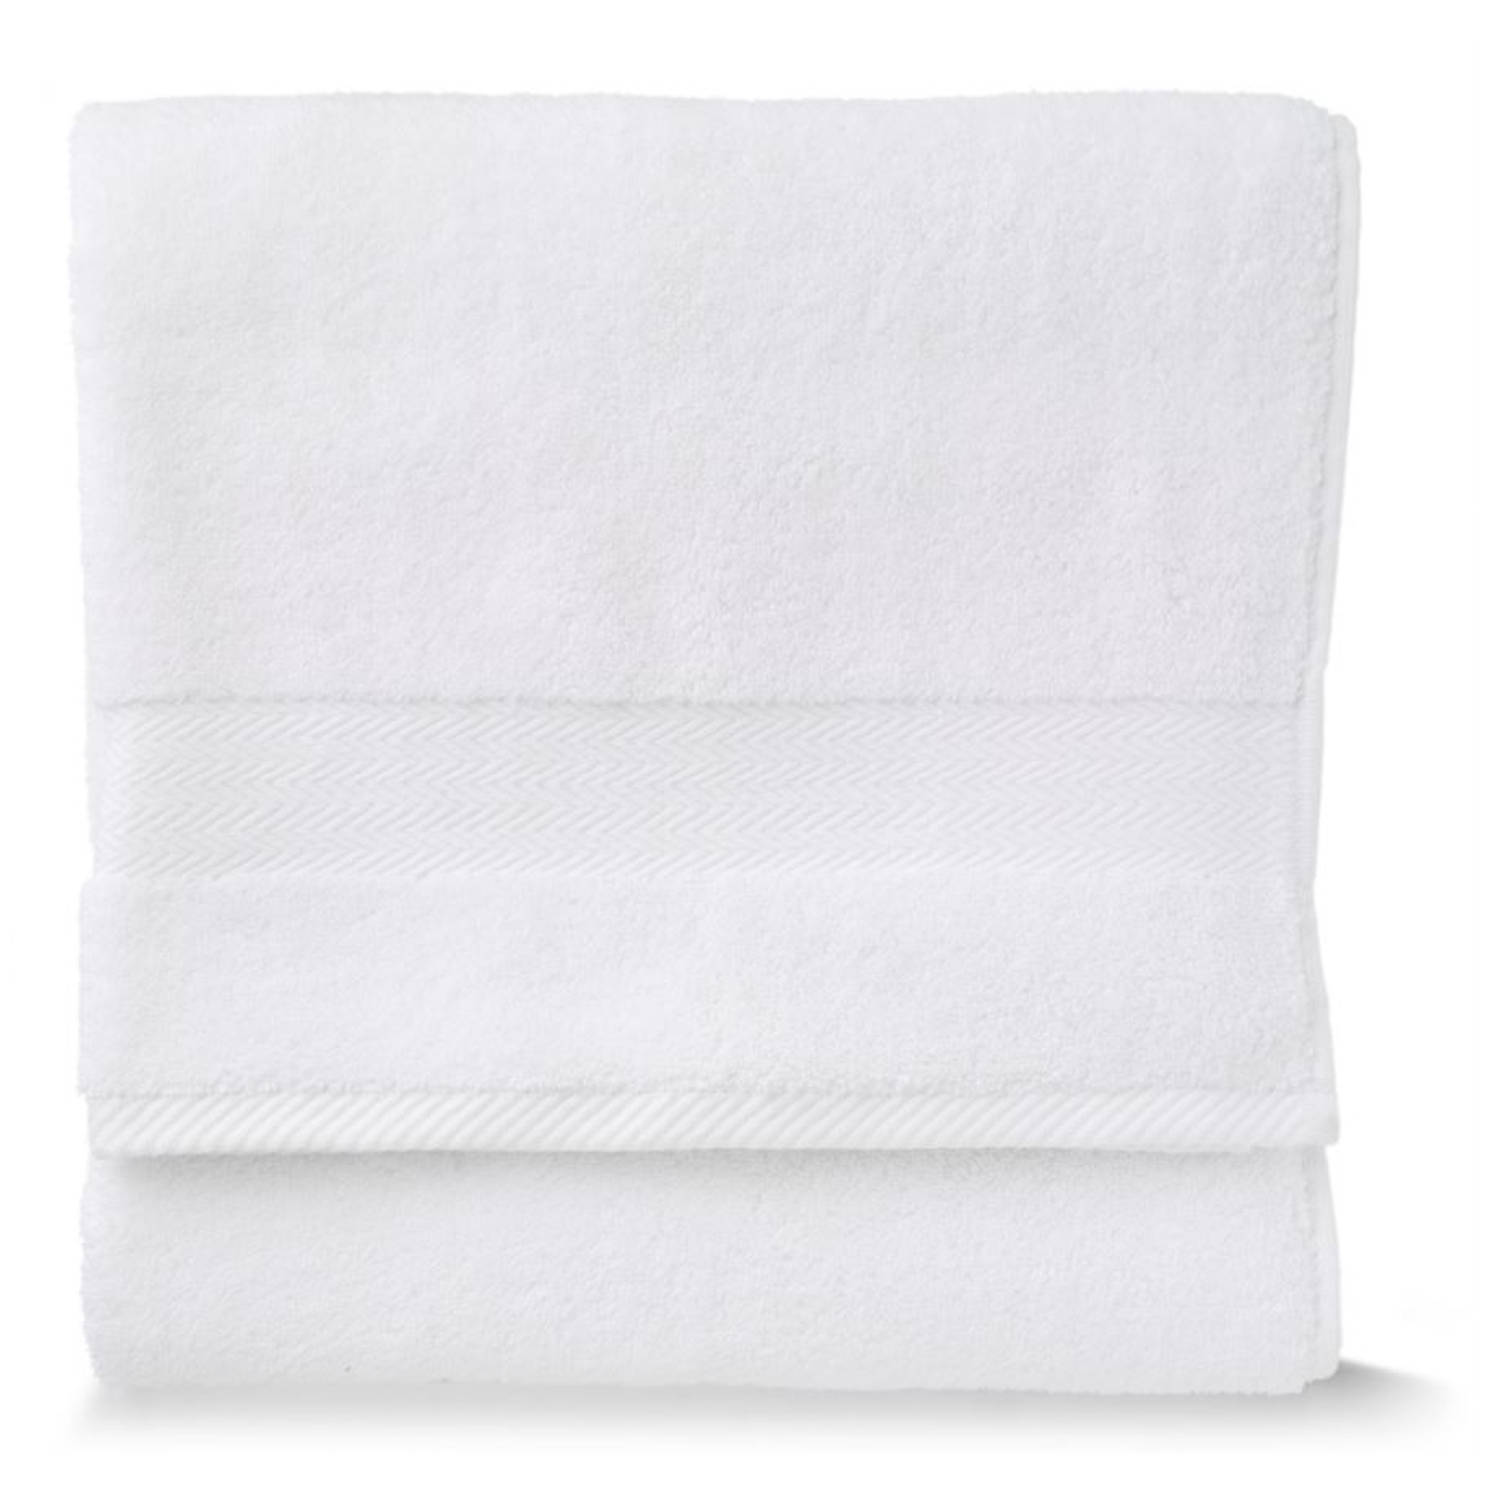 Detecteerbaar intern rammelaar Blokker handdoek 600g - wit - 140x70 cm | Blokker